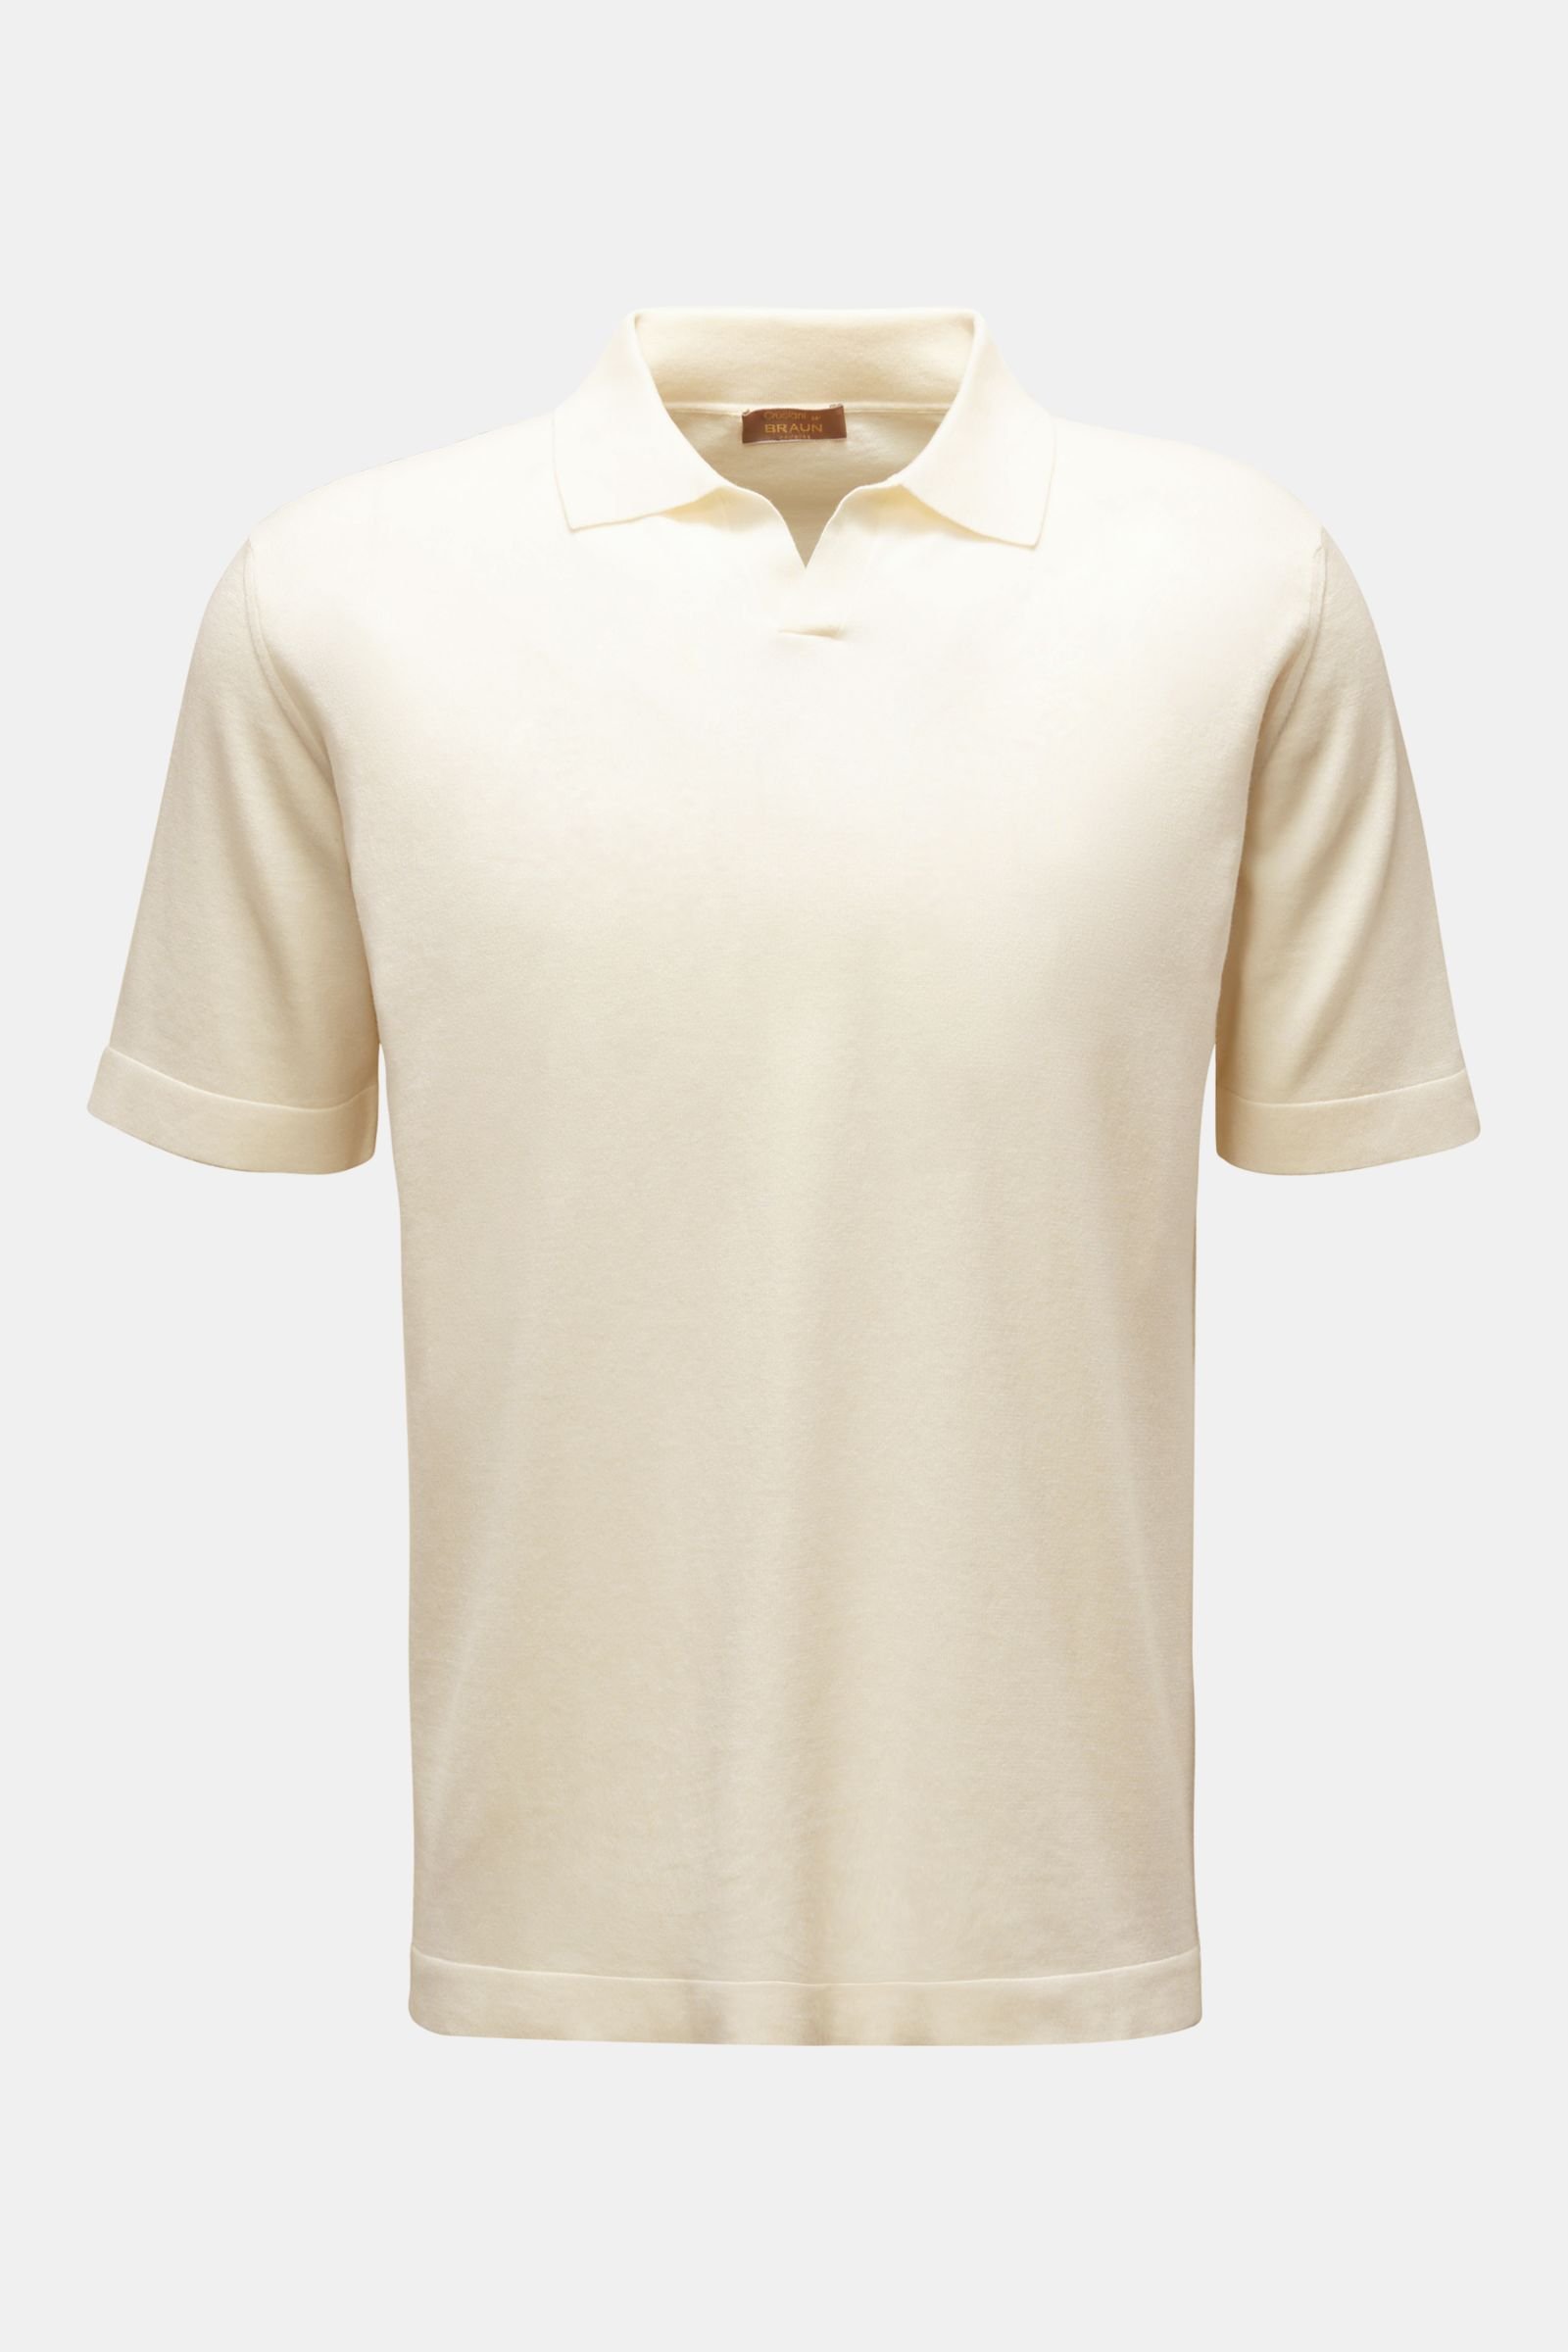 CRUCIANI short sleeve knit polo shirt off-white | BRAUN Hamburg